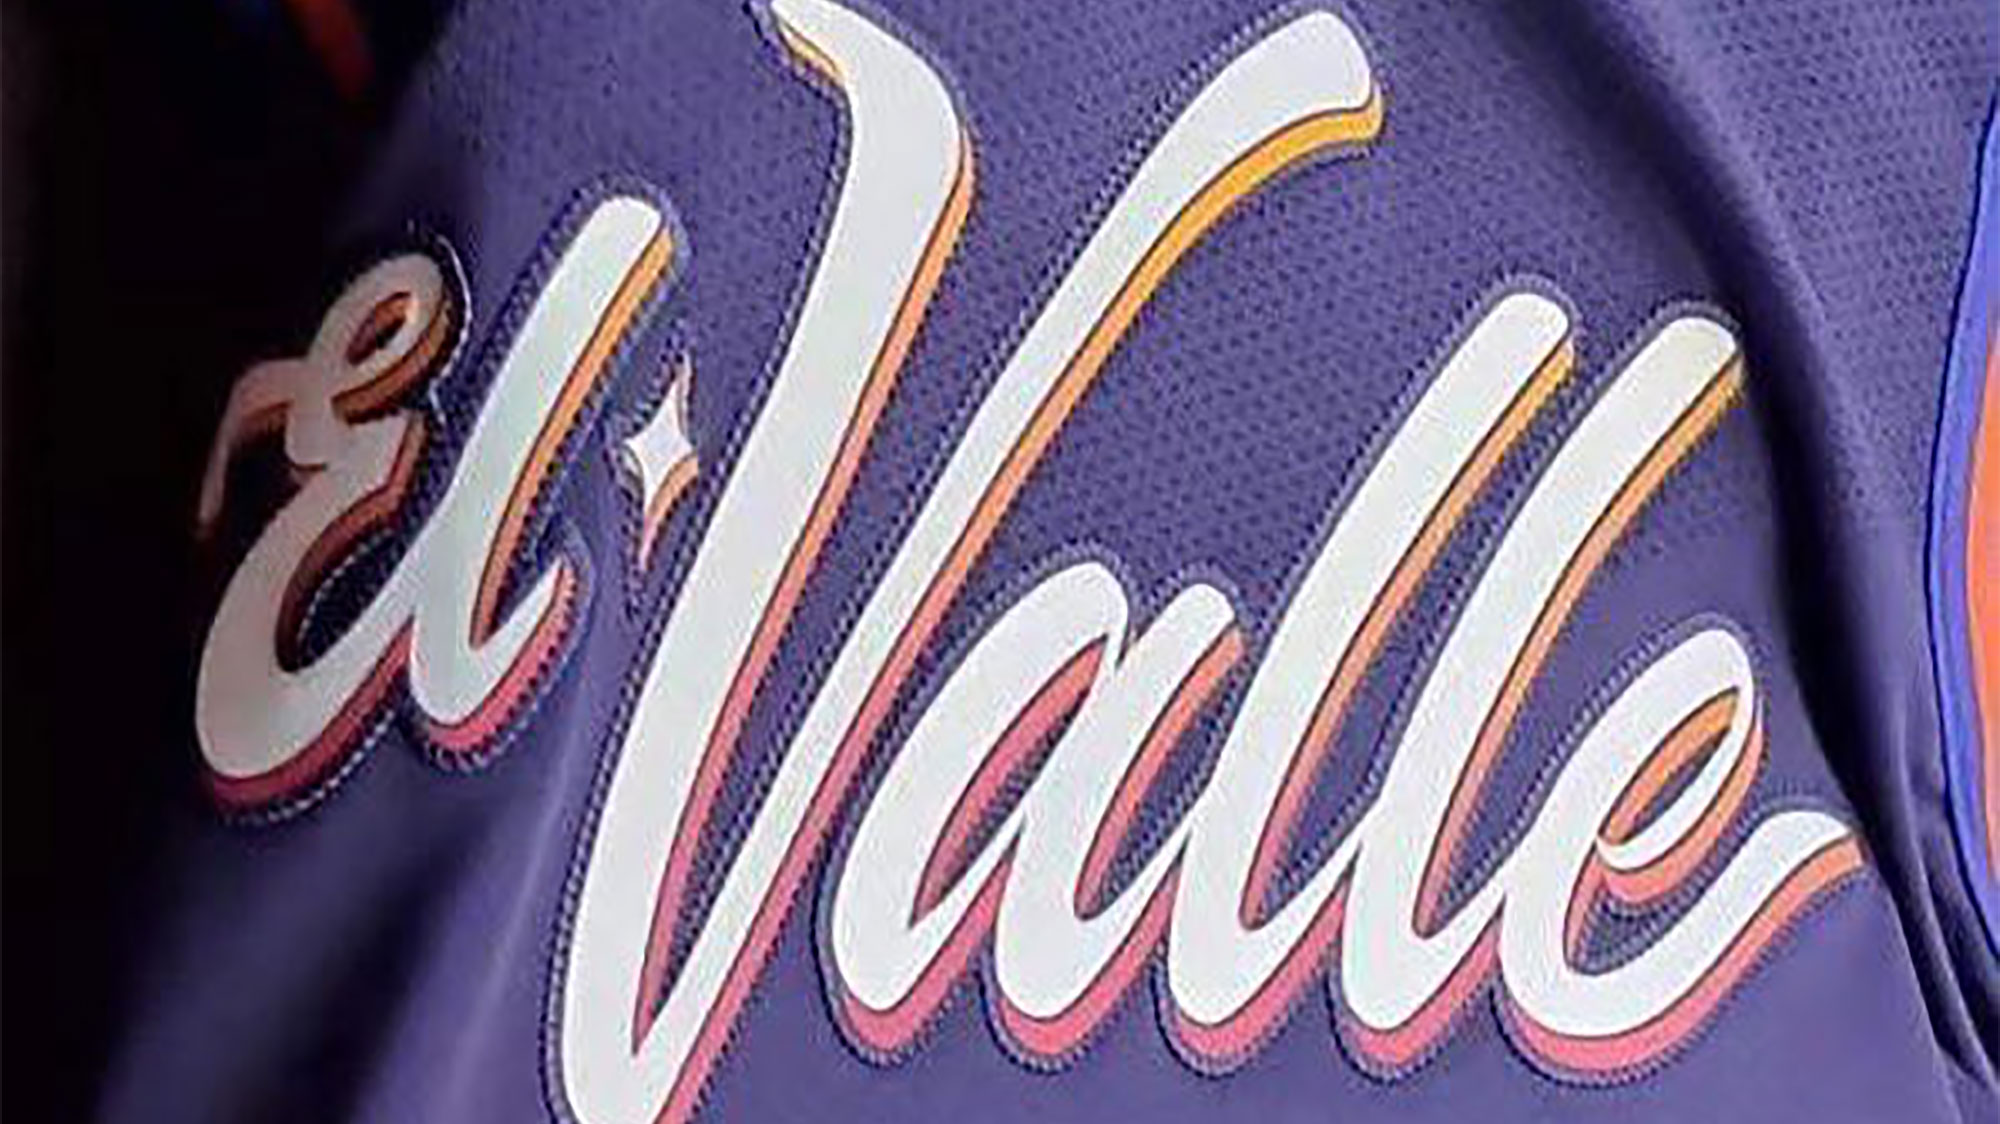 Phoenix Suns’ New “El Valle” City Edition Jerseys Leak SportsLogos